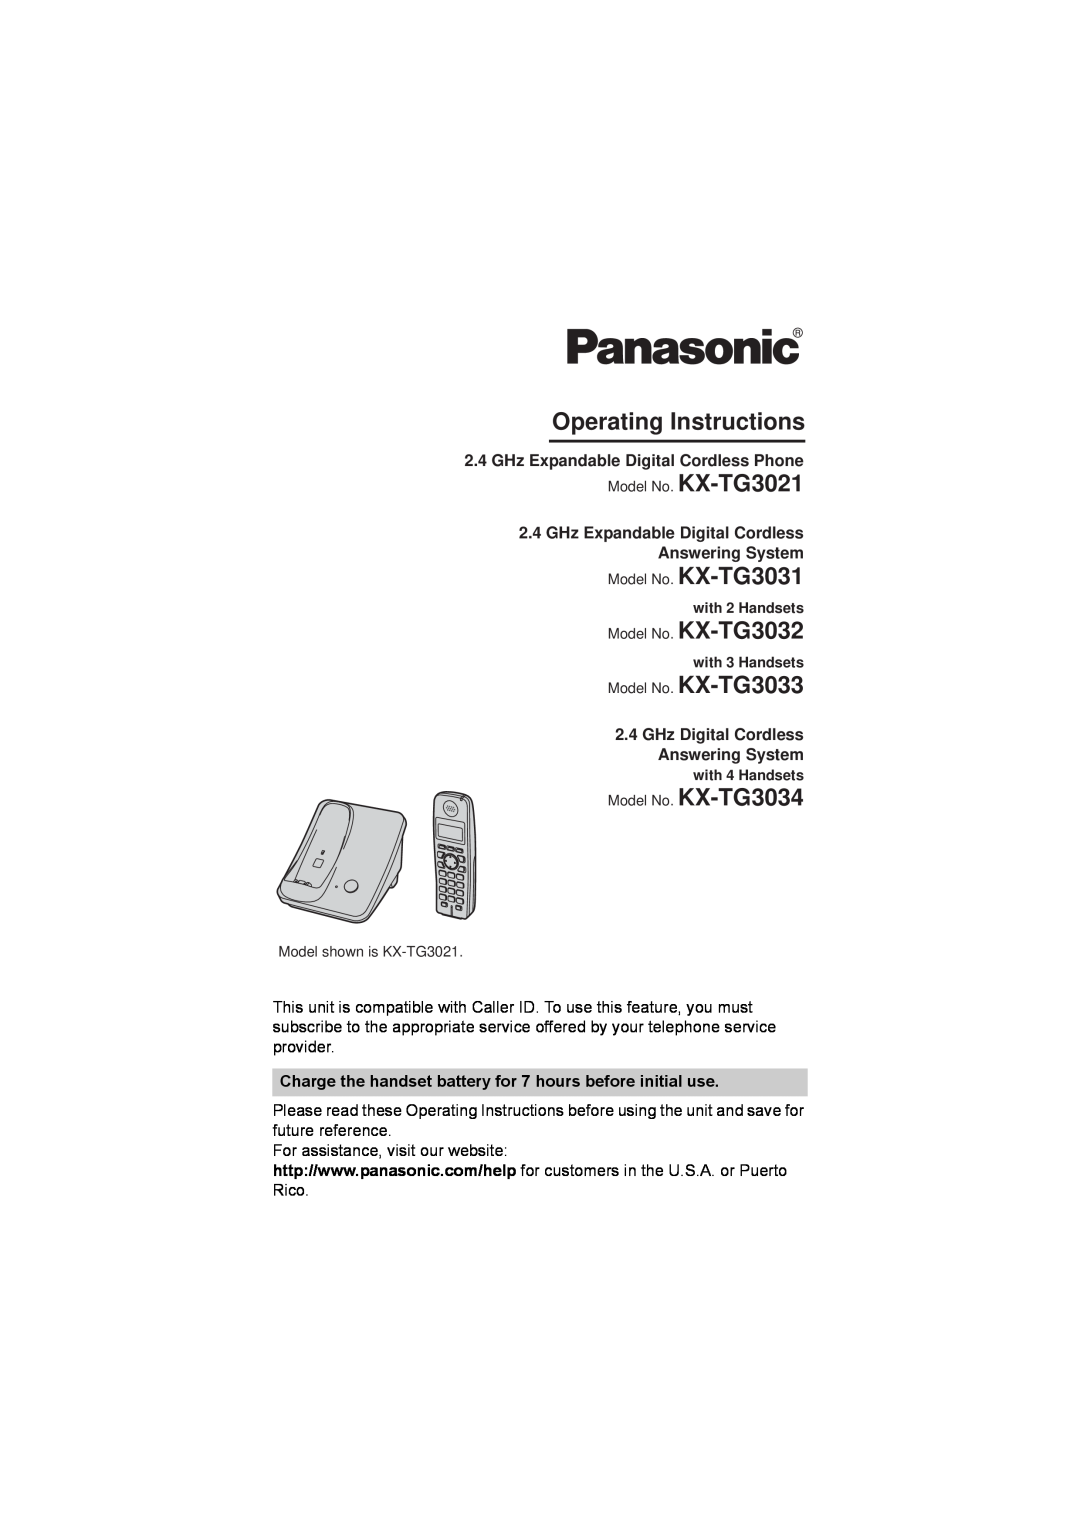 Panasonic KX-TG3031, KX-TG3021 operating instructions Operating Instructions, GHz Expandable Digital Cordless Phone 